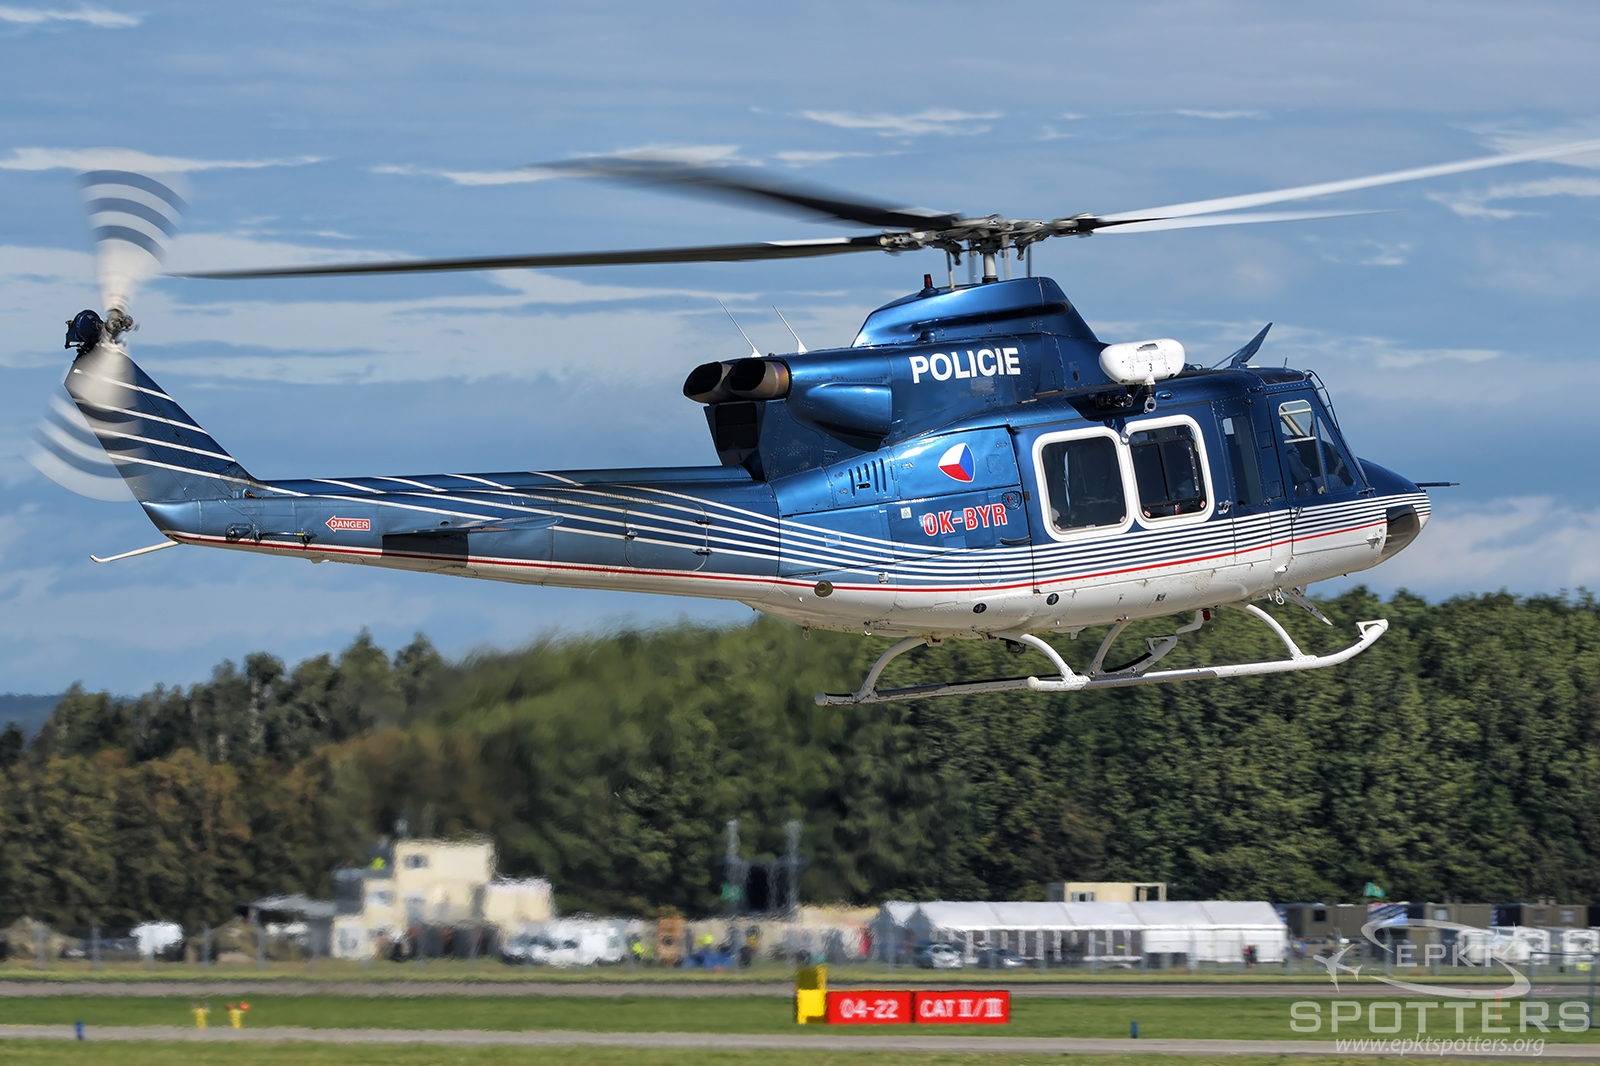 OK-BYR - Bell 412 EP (Czech Republic - Police) / Leos Janacek Airport - Ostrava Czech Republic [LKMT/OSR]